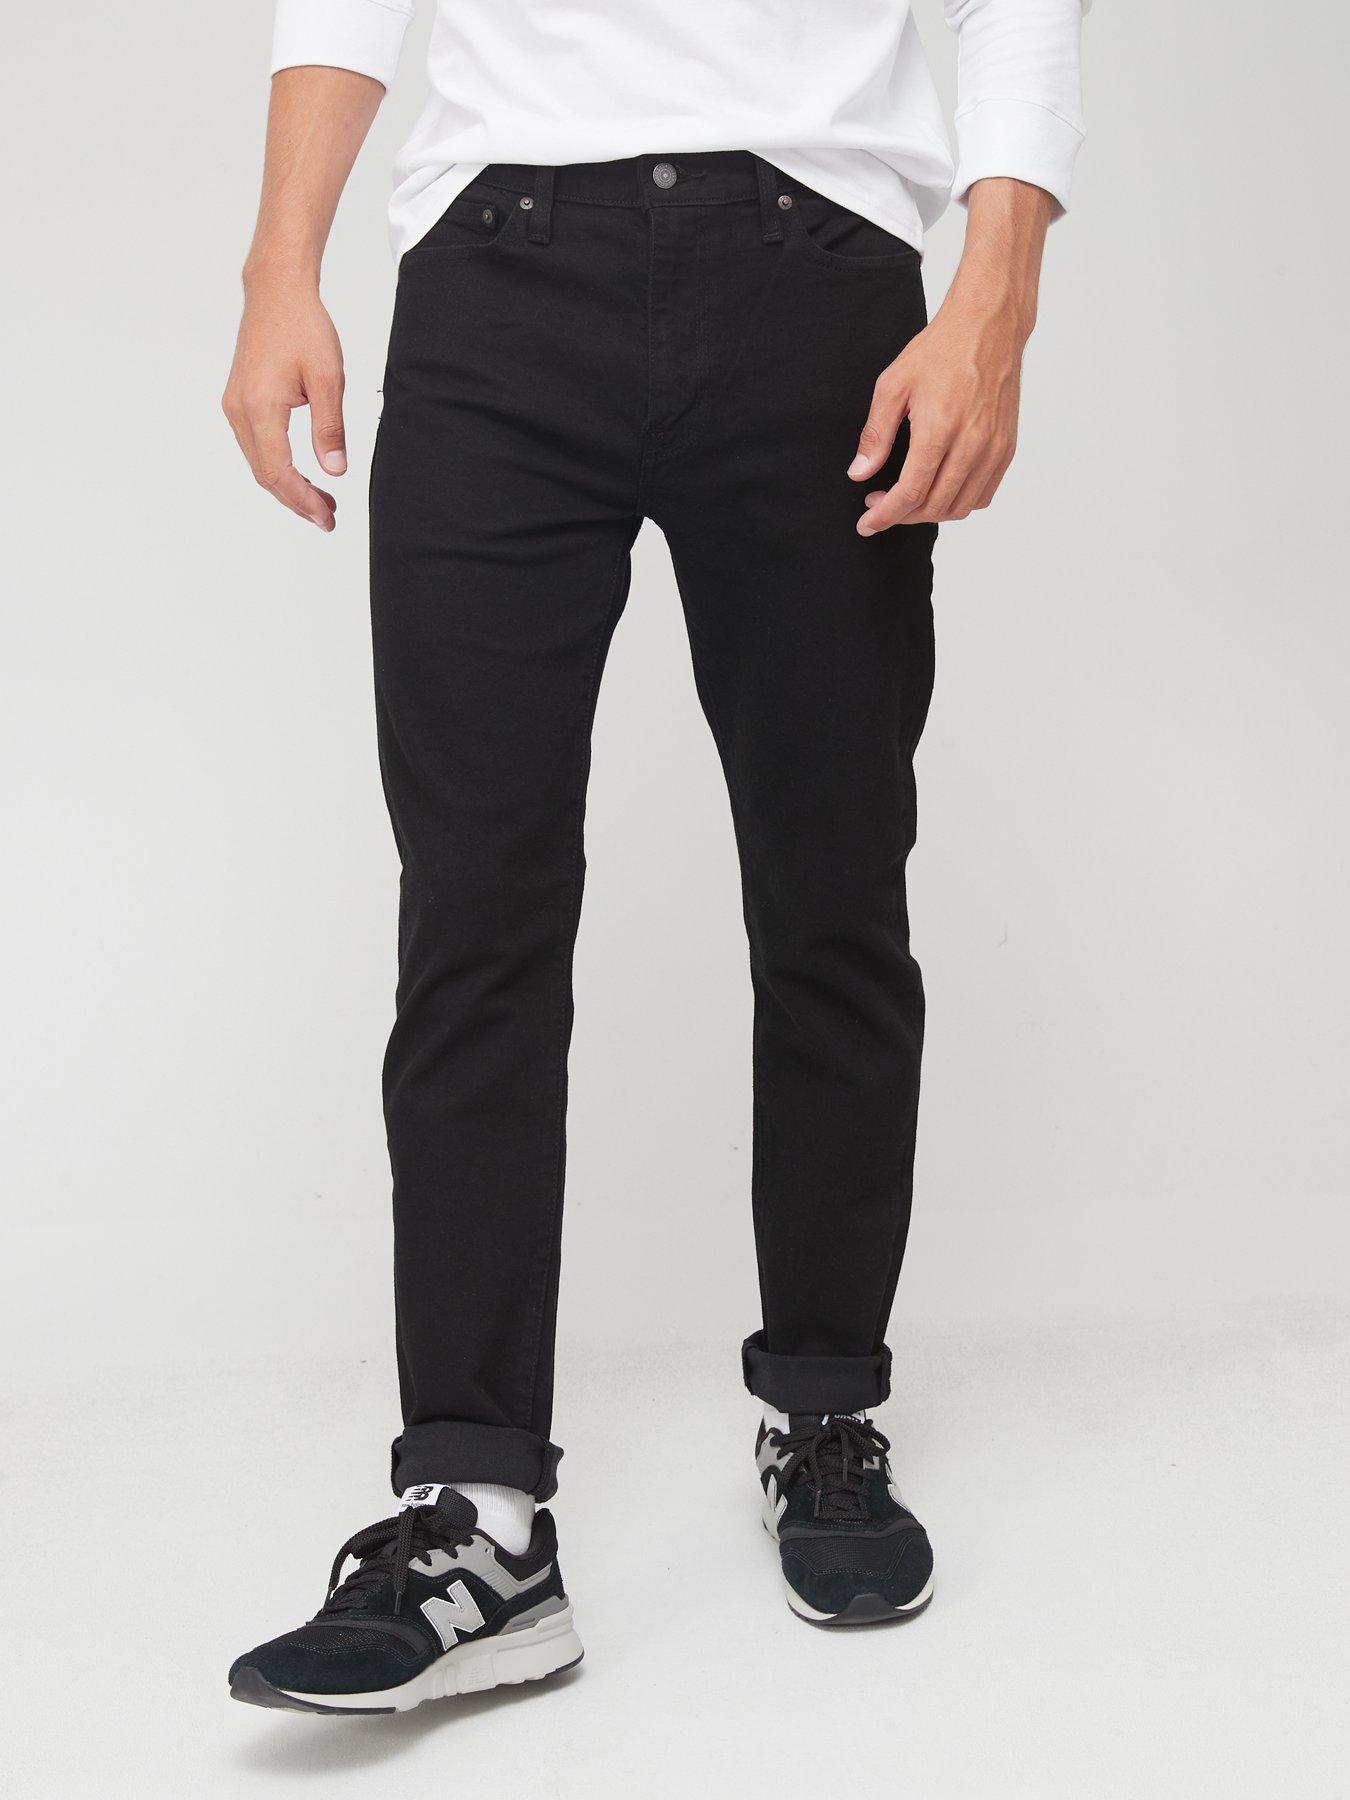 Levi's 510 Skinny Fit Jeans - Black 